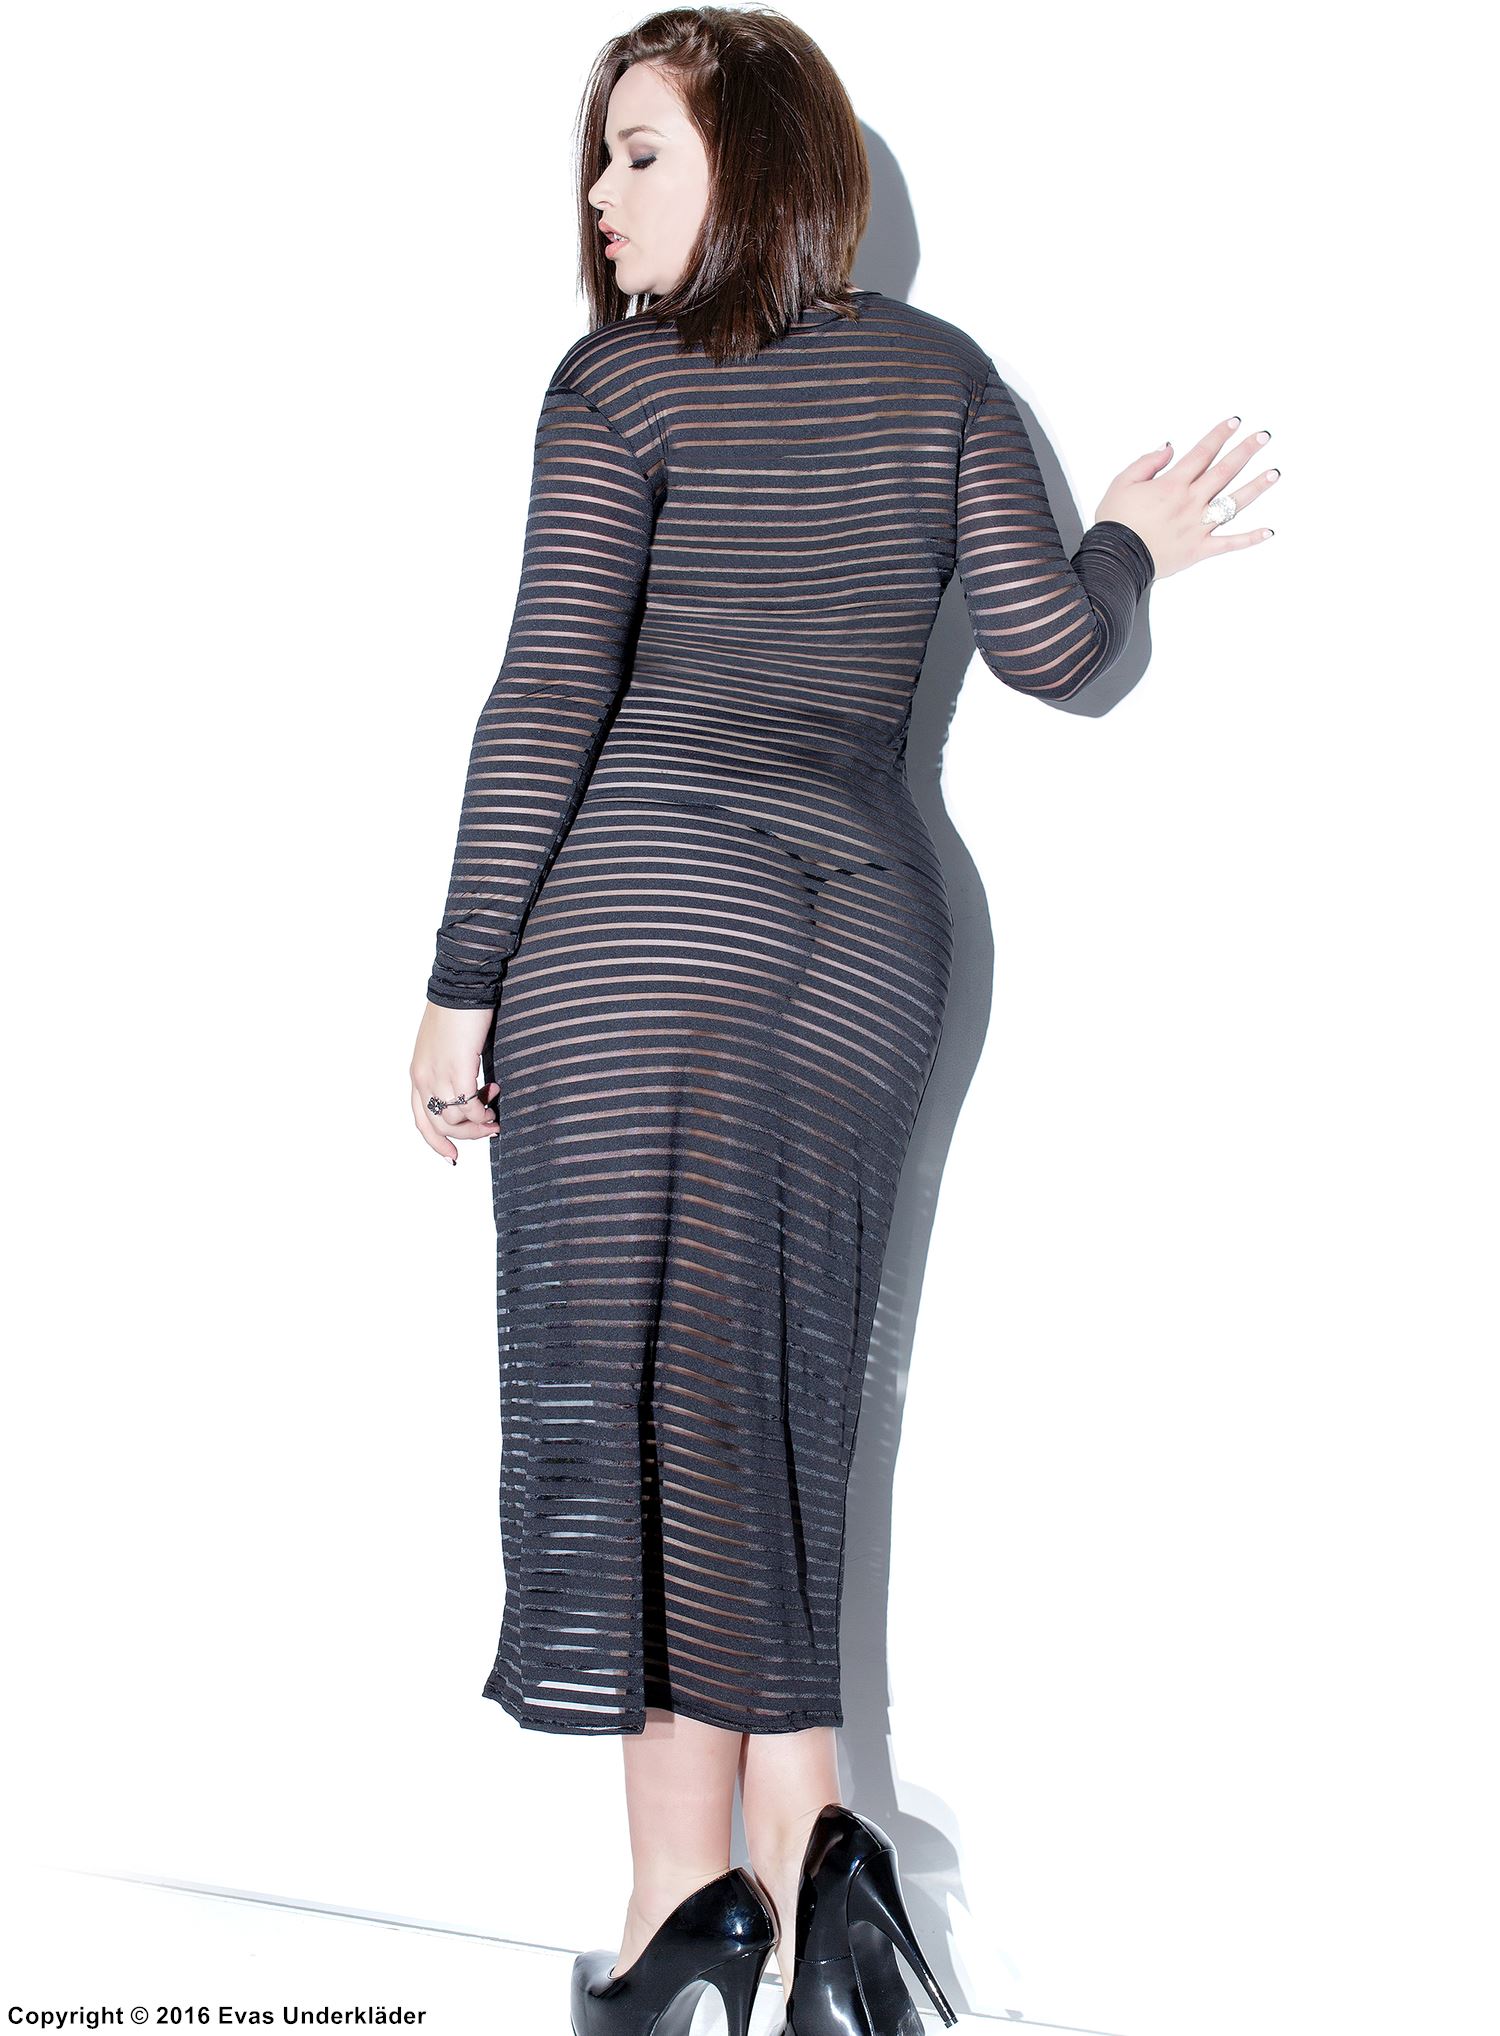 Sheer dress, long sleeves, stripes, plus size